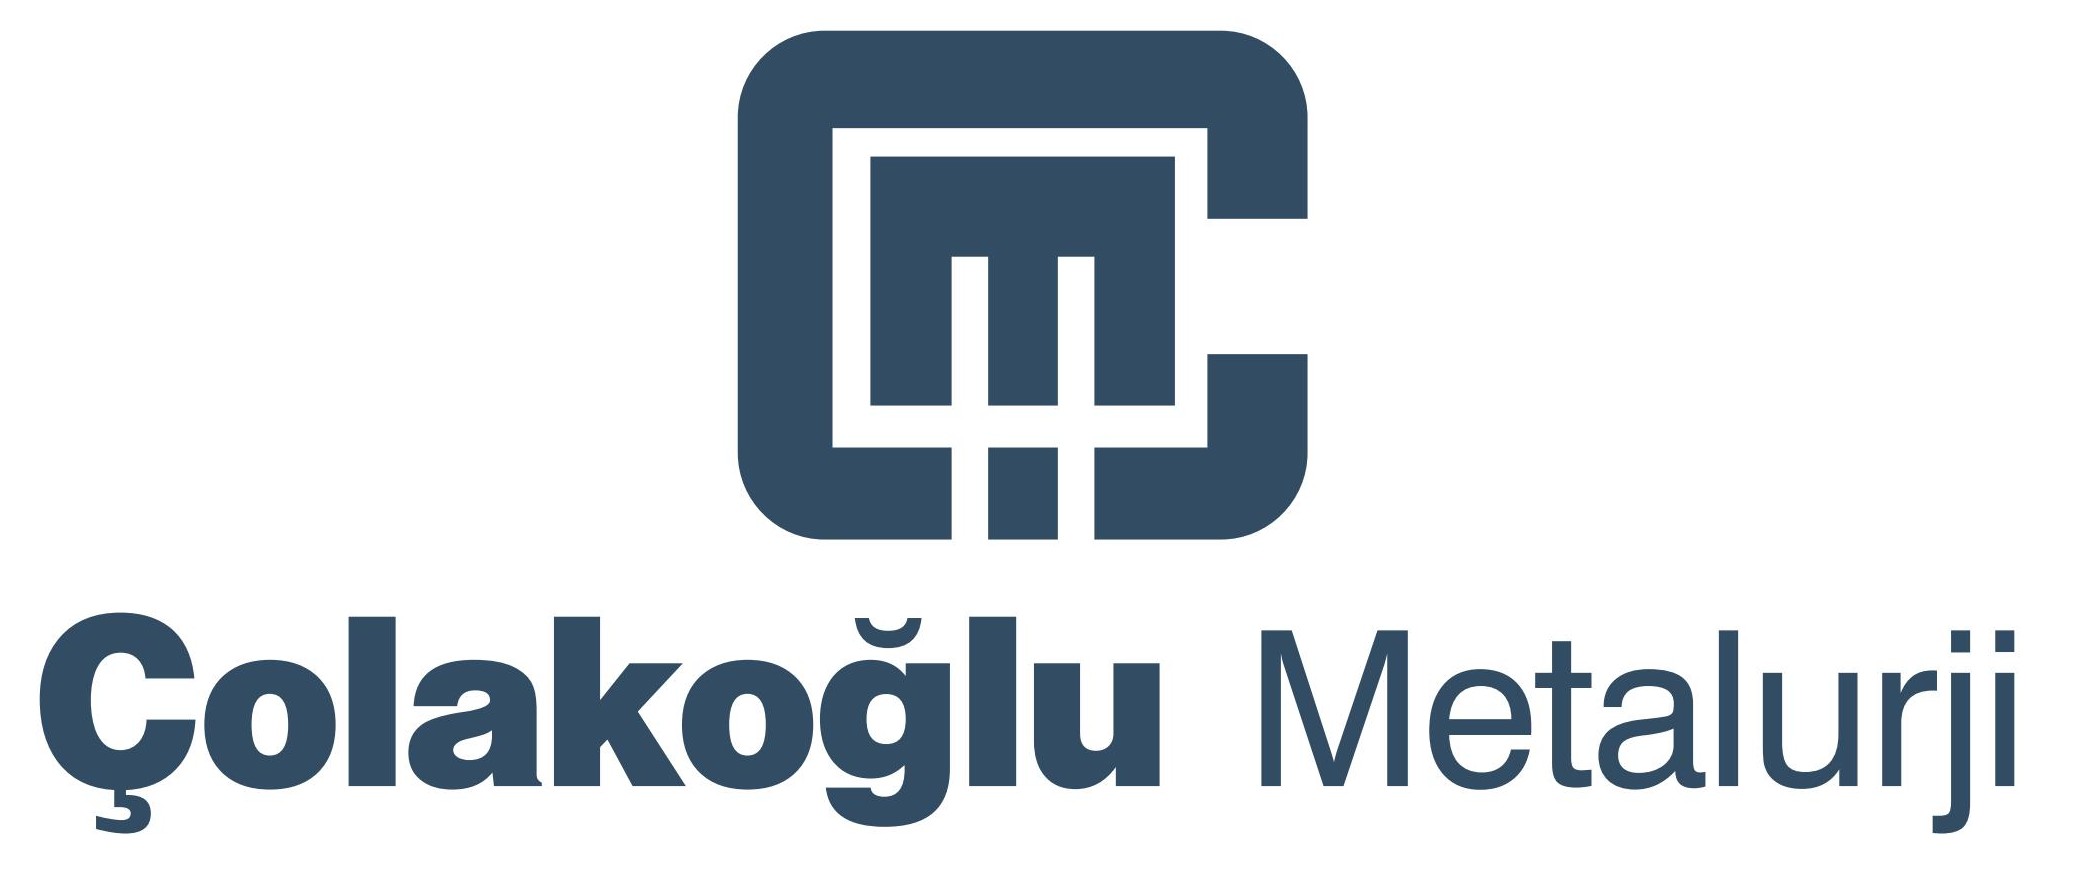 Primetals Technologies to convert VD to VOD plant at Çolakoğlu in Turkey